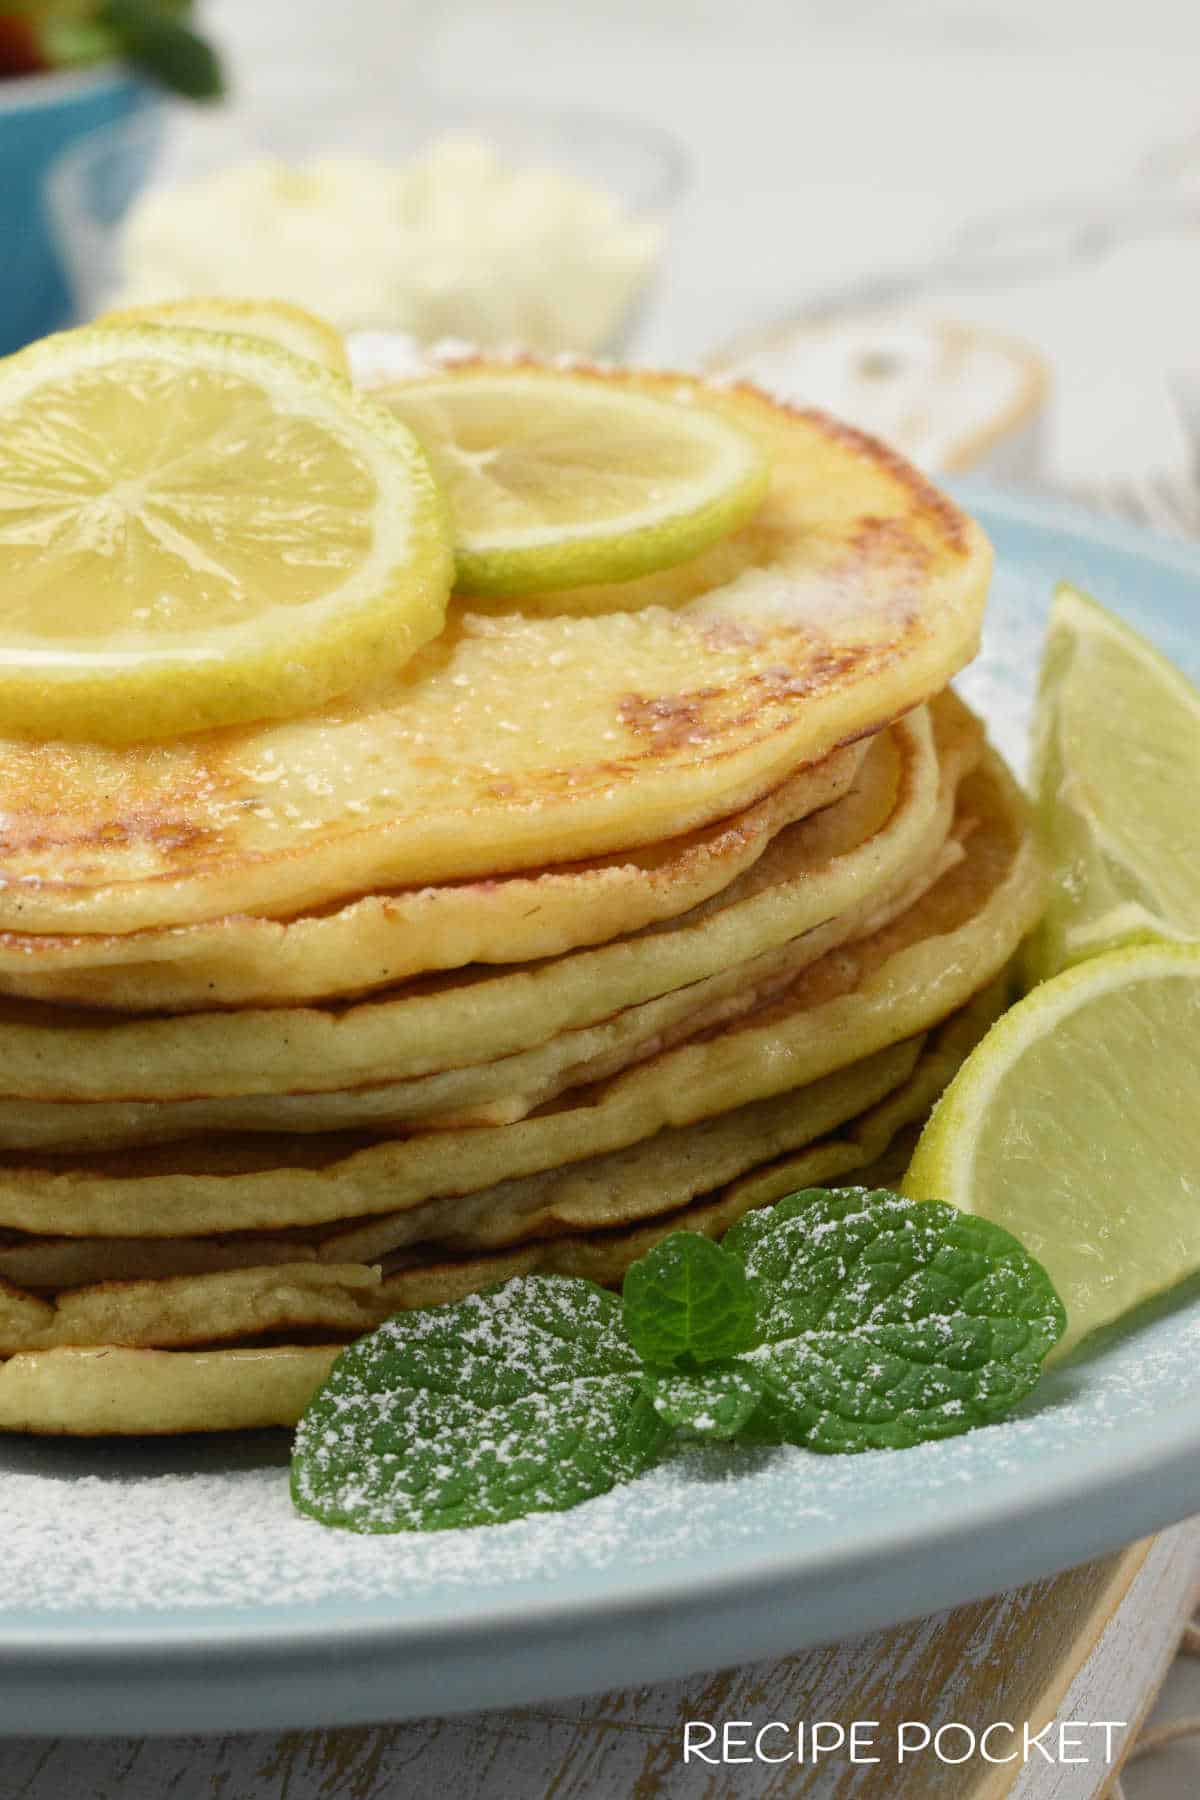 Lemon ricotta pancakes on a blue plate.